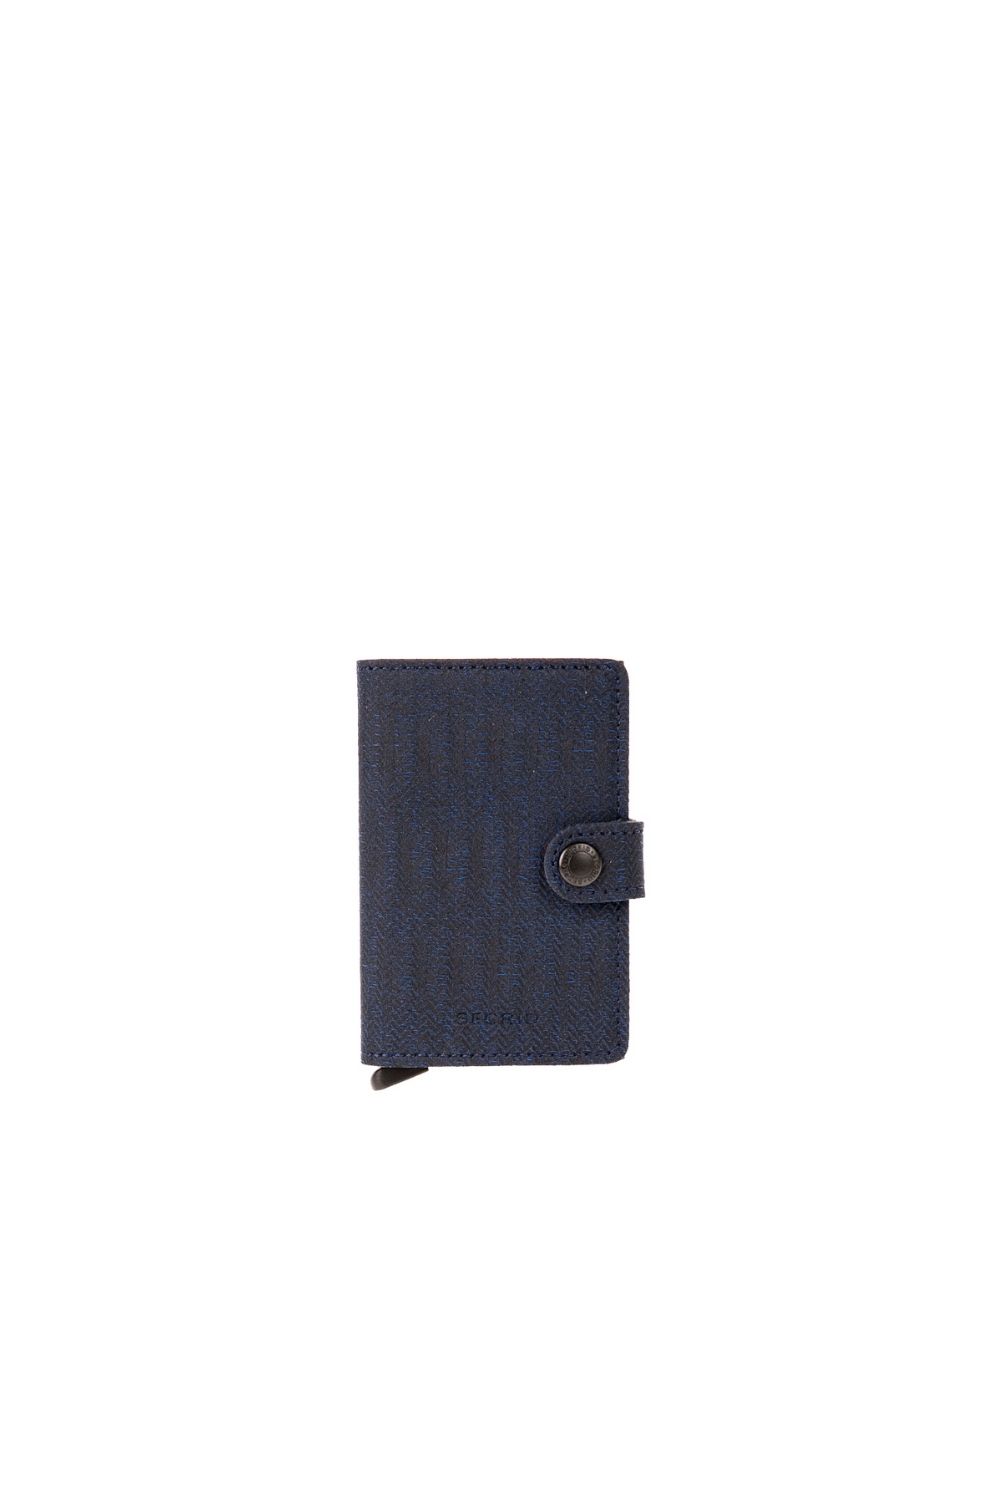 SECRID – Unisex πορτοφόλι SECRID Miniwallet μπλε 1768115.0-001E